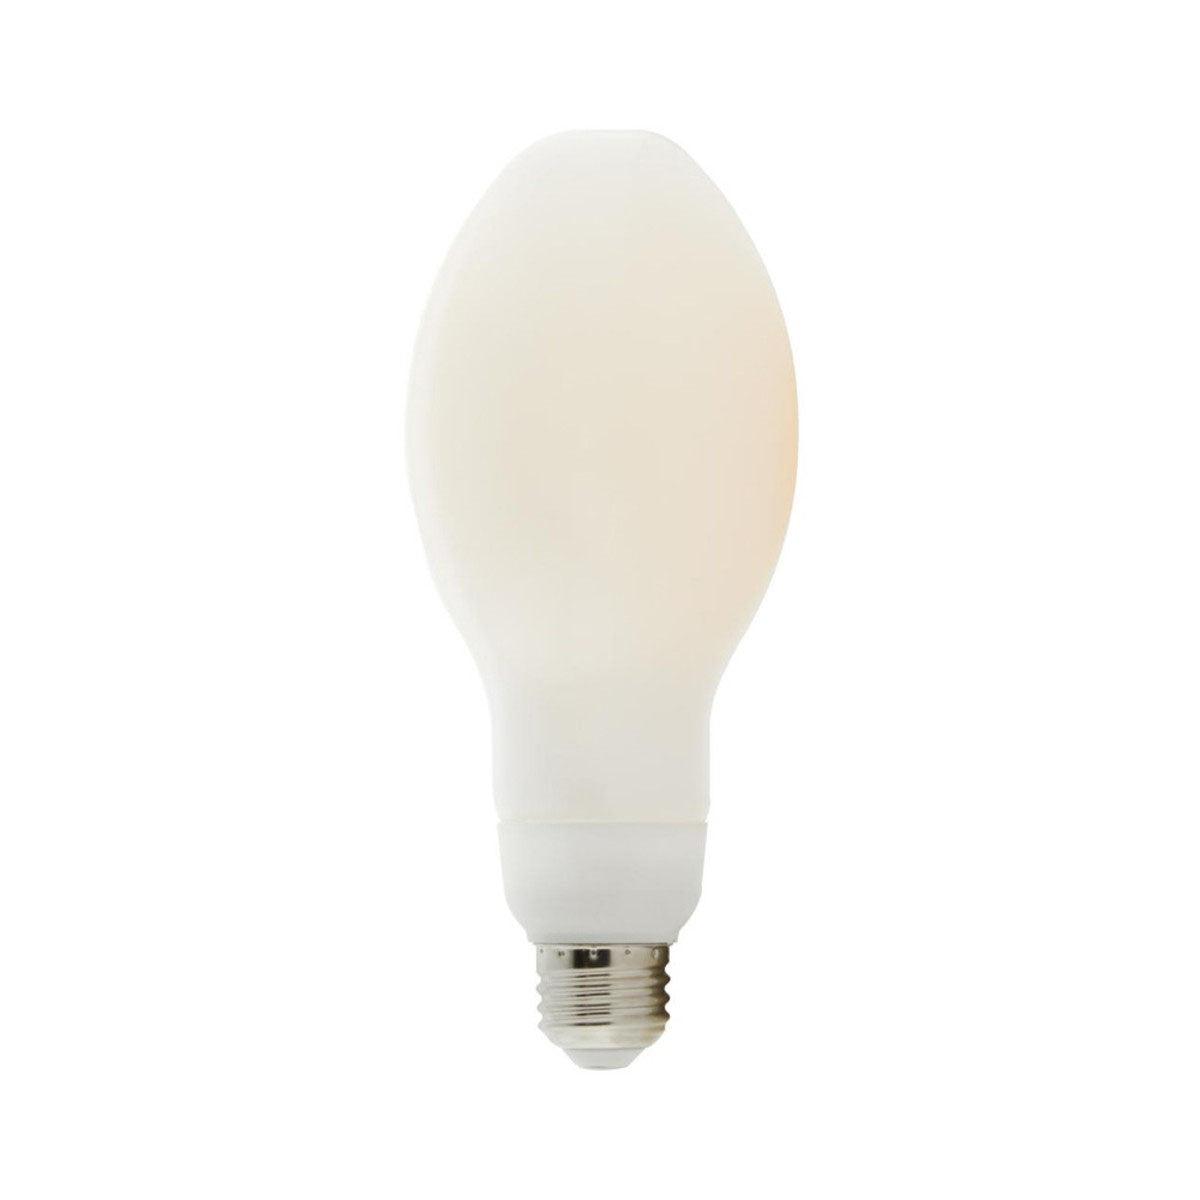 LED ED23 Bulb, 30 Watt, 4000 Lumens, 5000K, E26 Medium Base, Frosted Finish